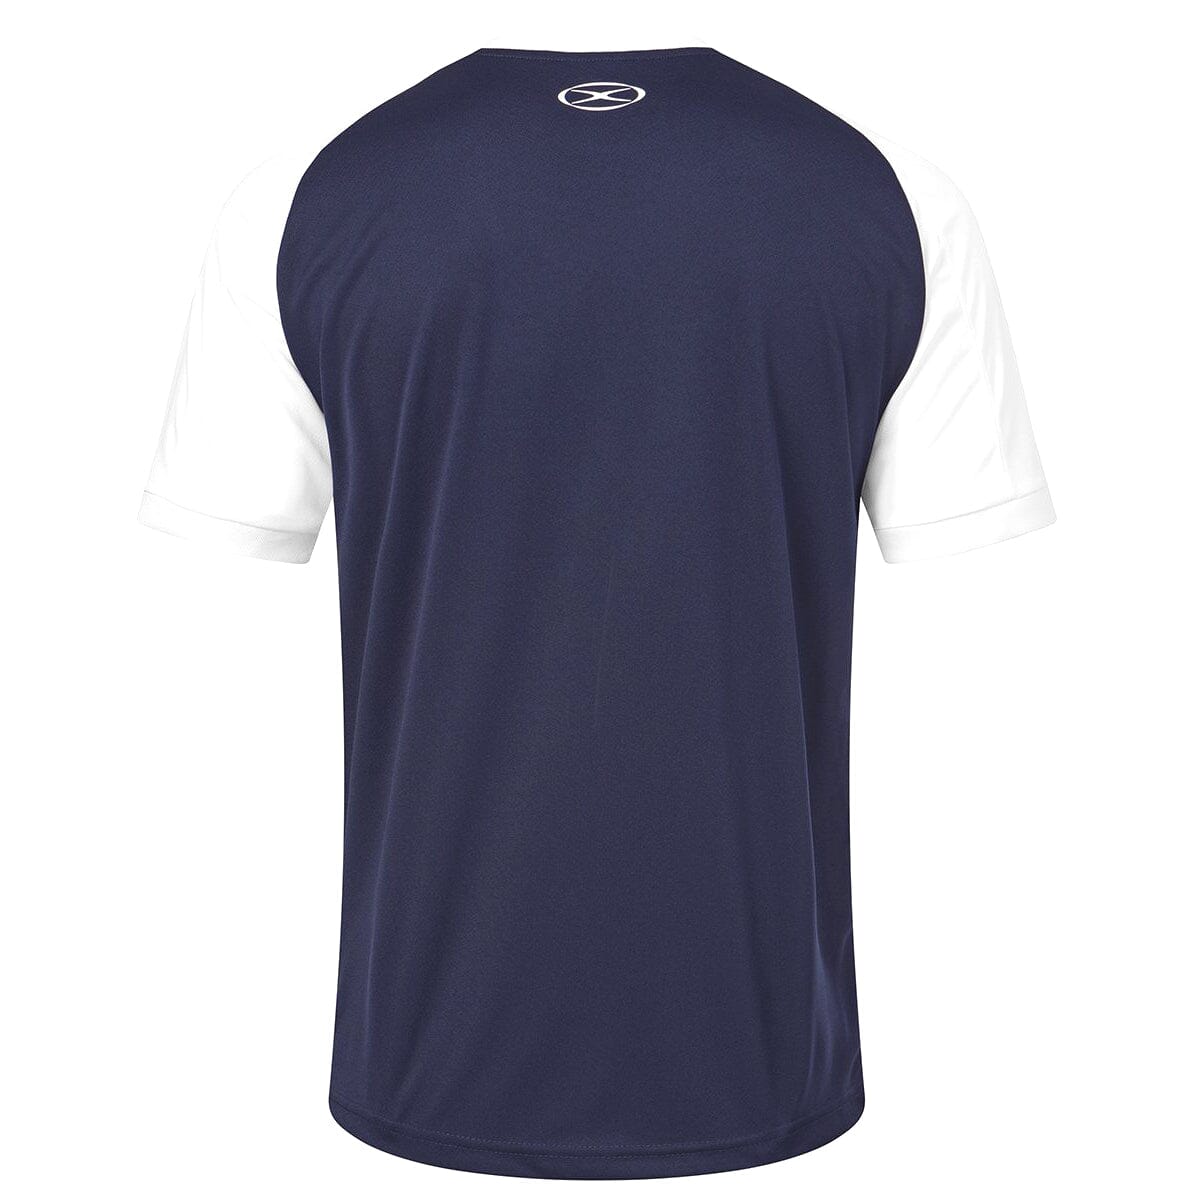 Xara International V4 Shirt - USA | 1042USA Apparel Xara 